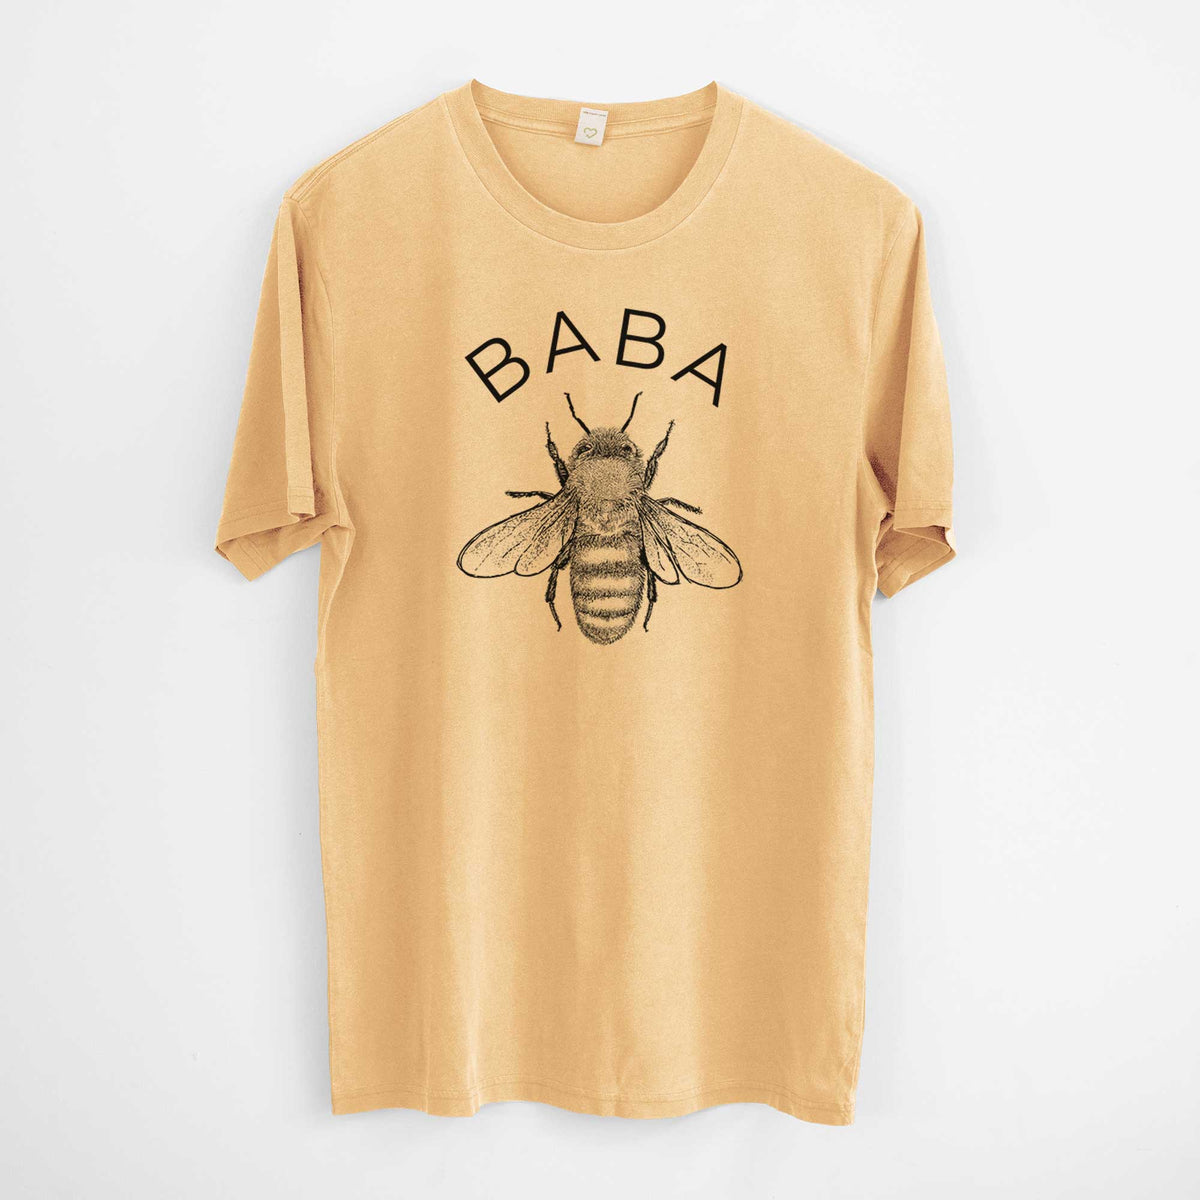 Baba Bee -  Mineral Wash 100% Organic Cotton Short Sleeve